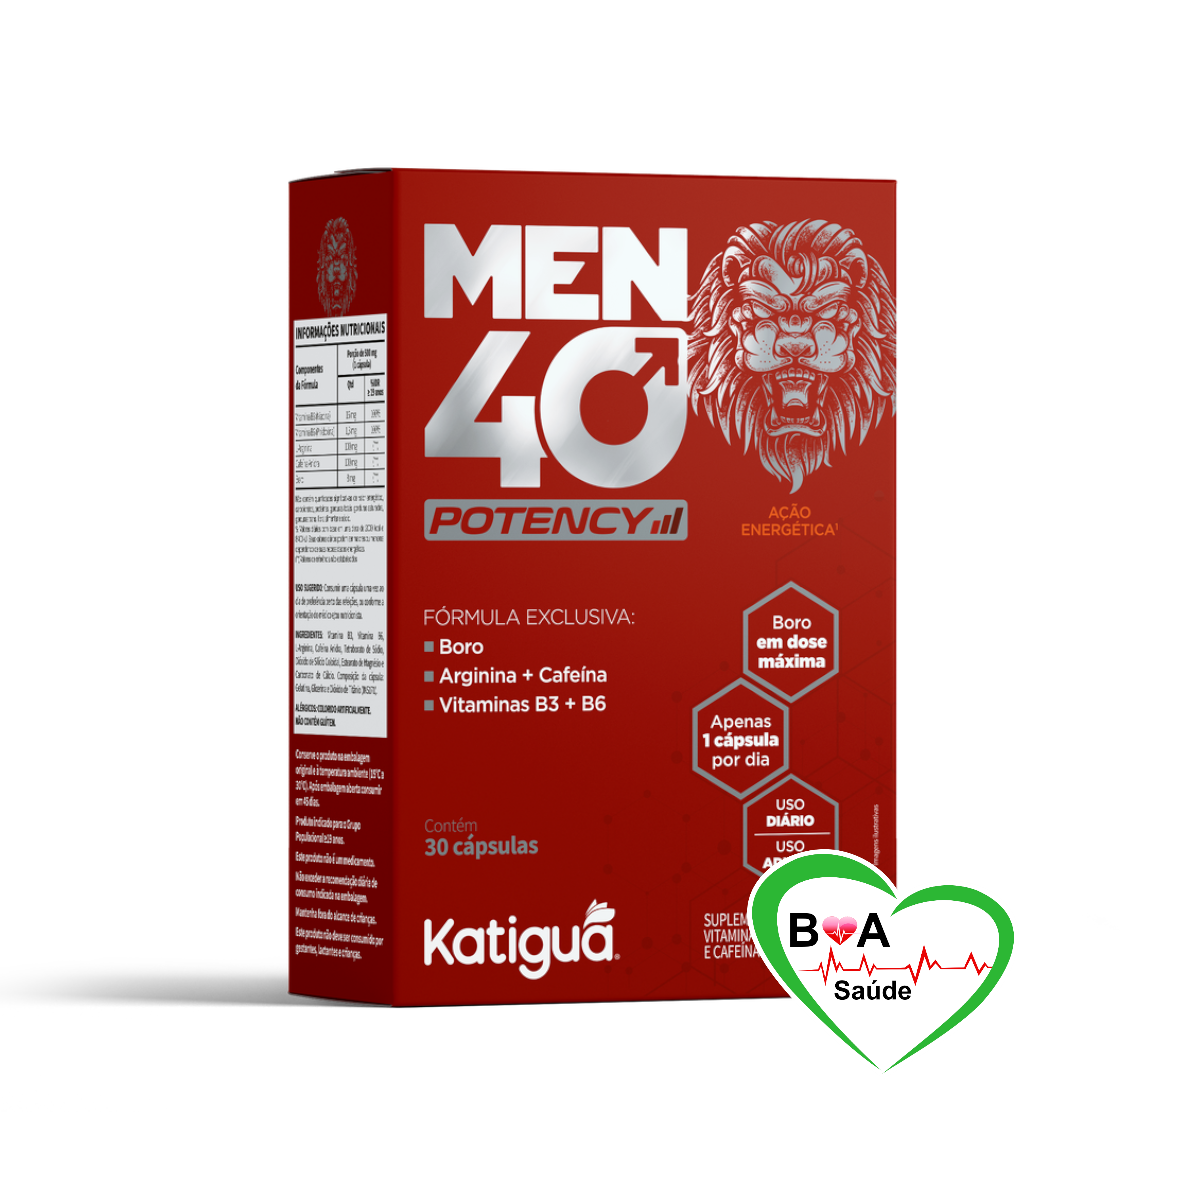 20211200-PT) Men's Health 243, PDF, Reciclagem